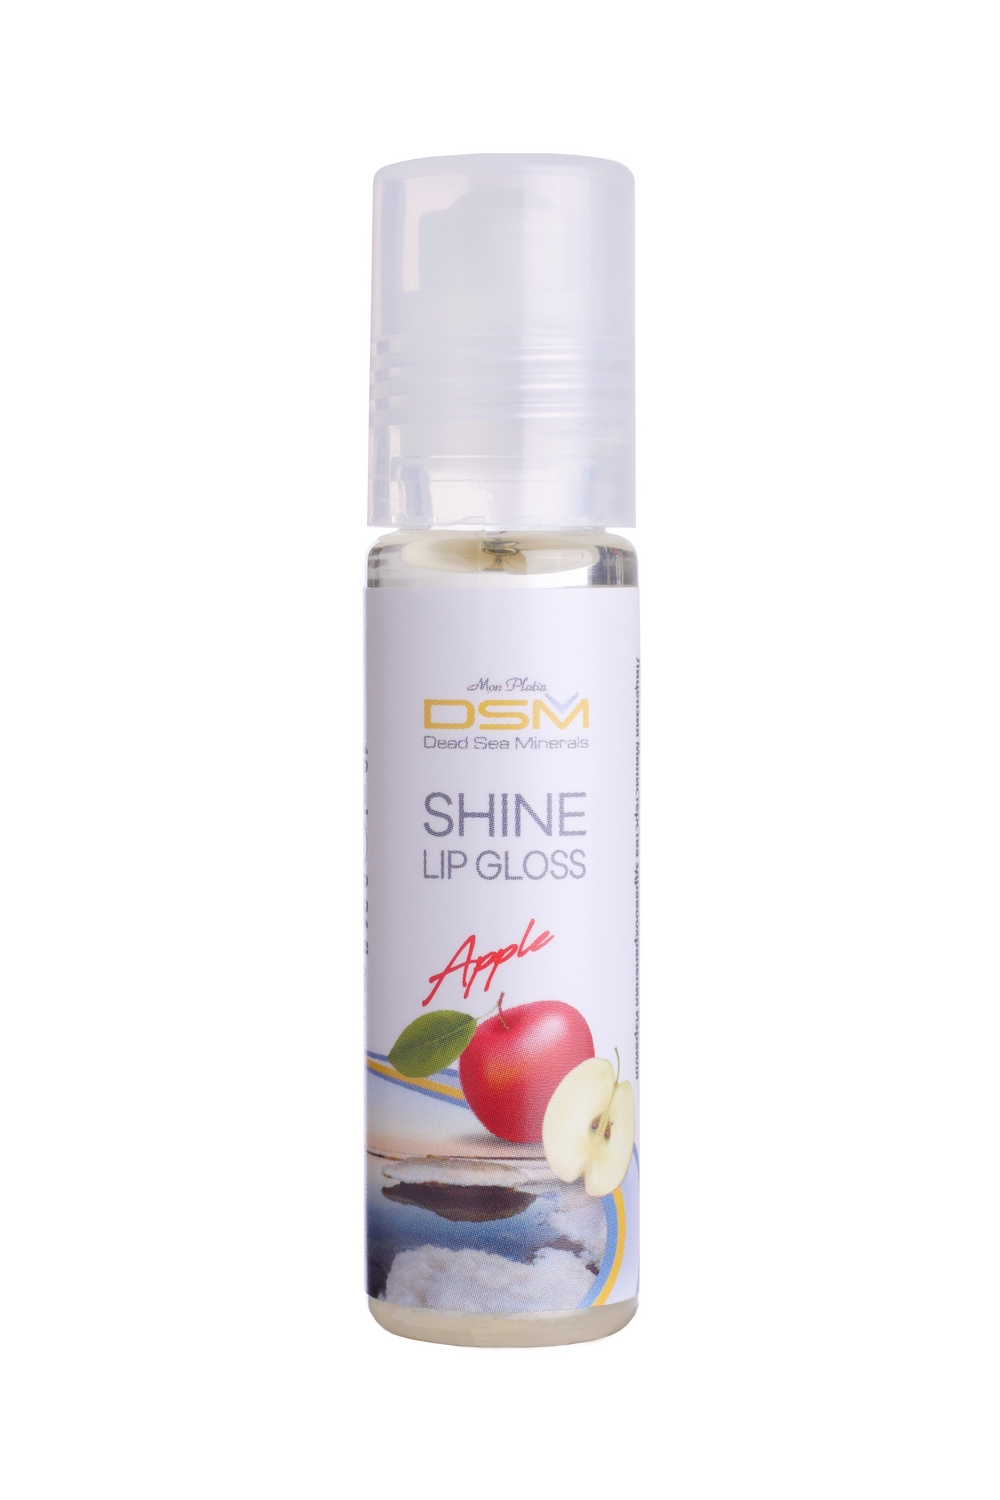 Shine Lip Gloss - apple flavor